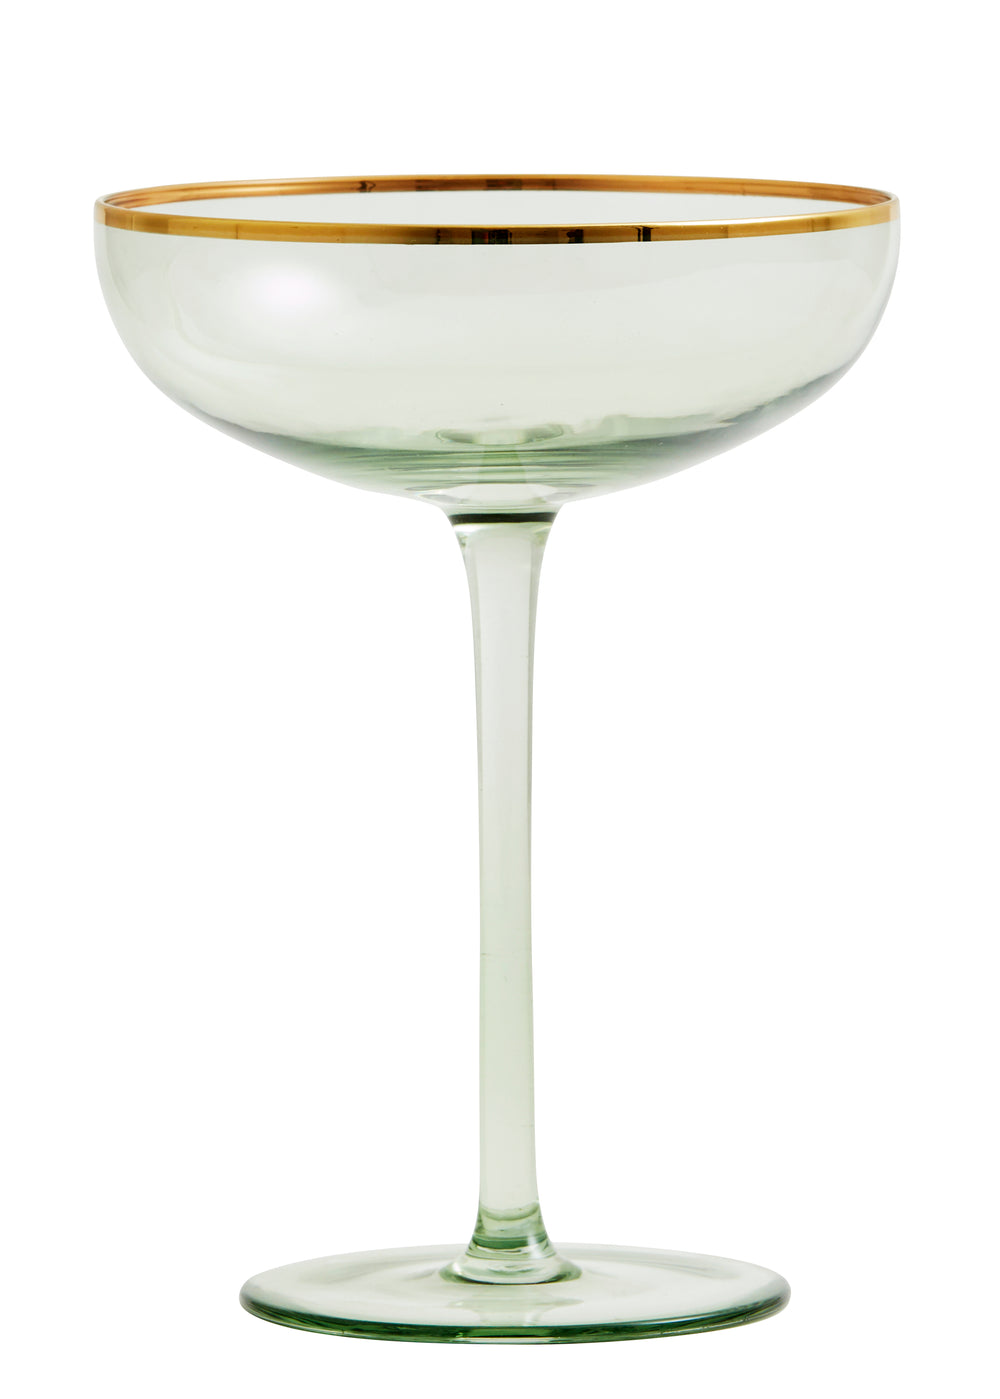 GREENA Cocktailglas mit Goldrand